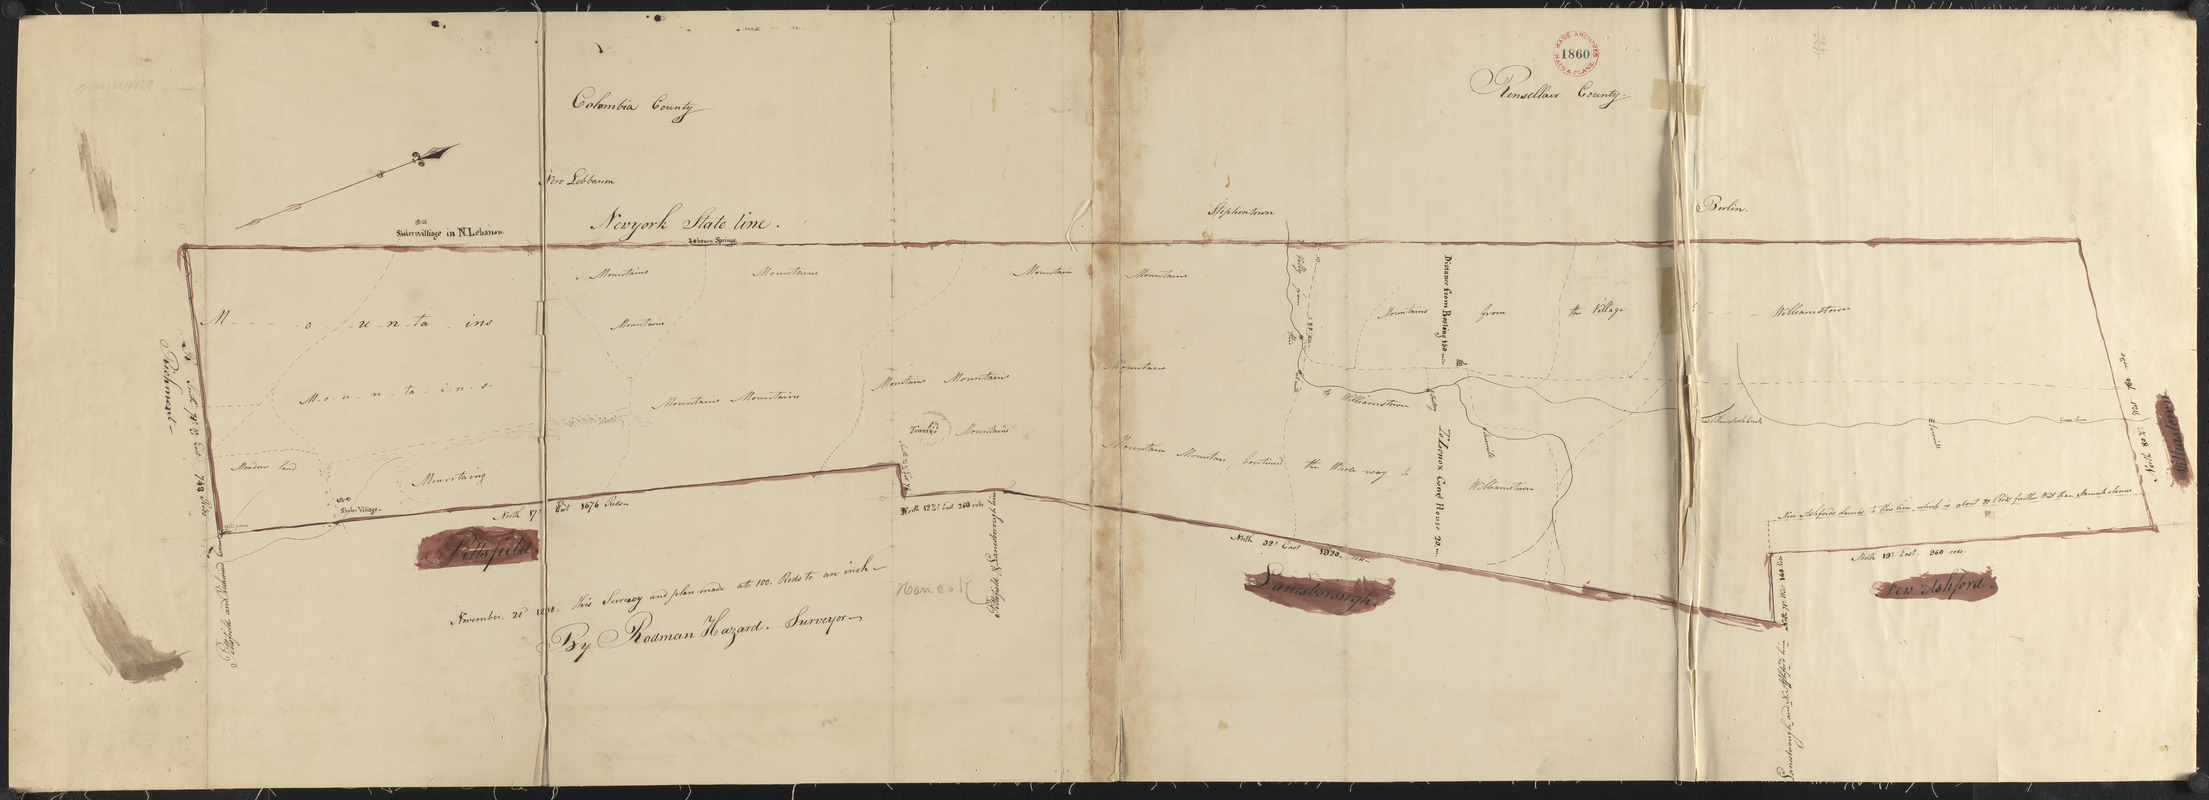 Plan of Hancock made by Rodman Hazard, dated November 20, 1830